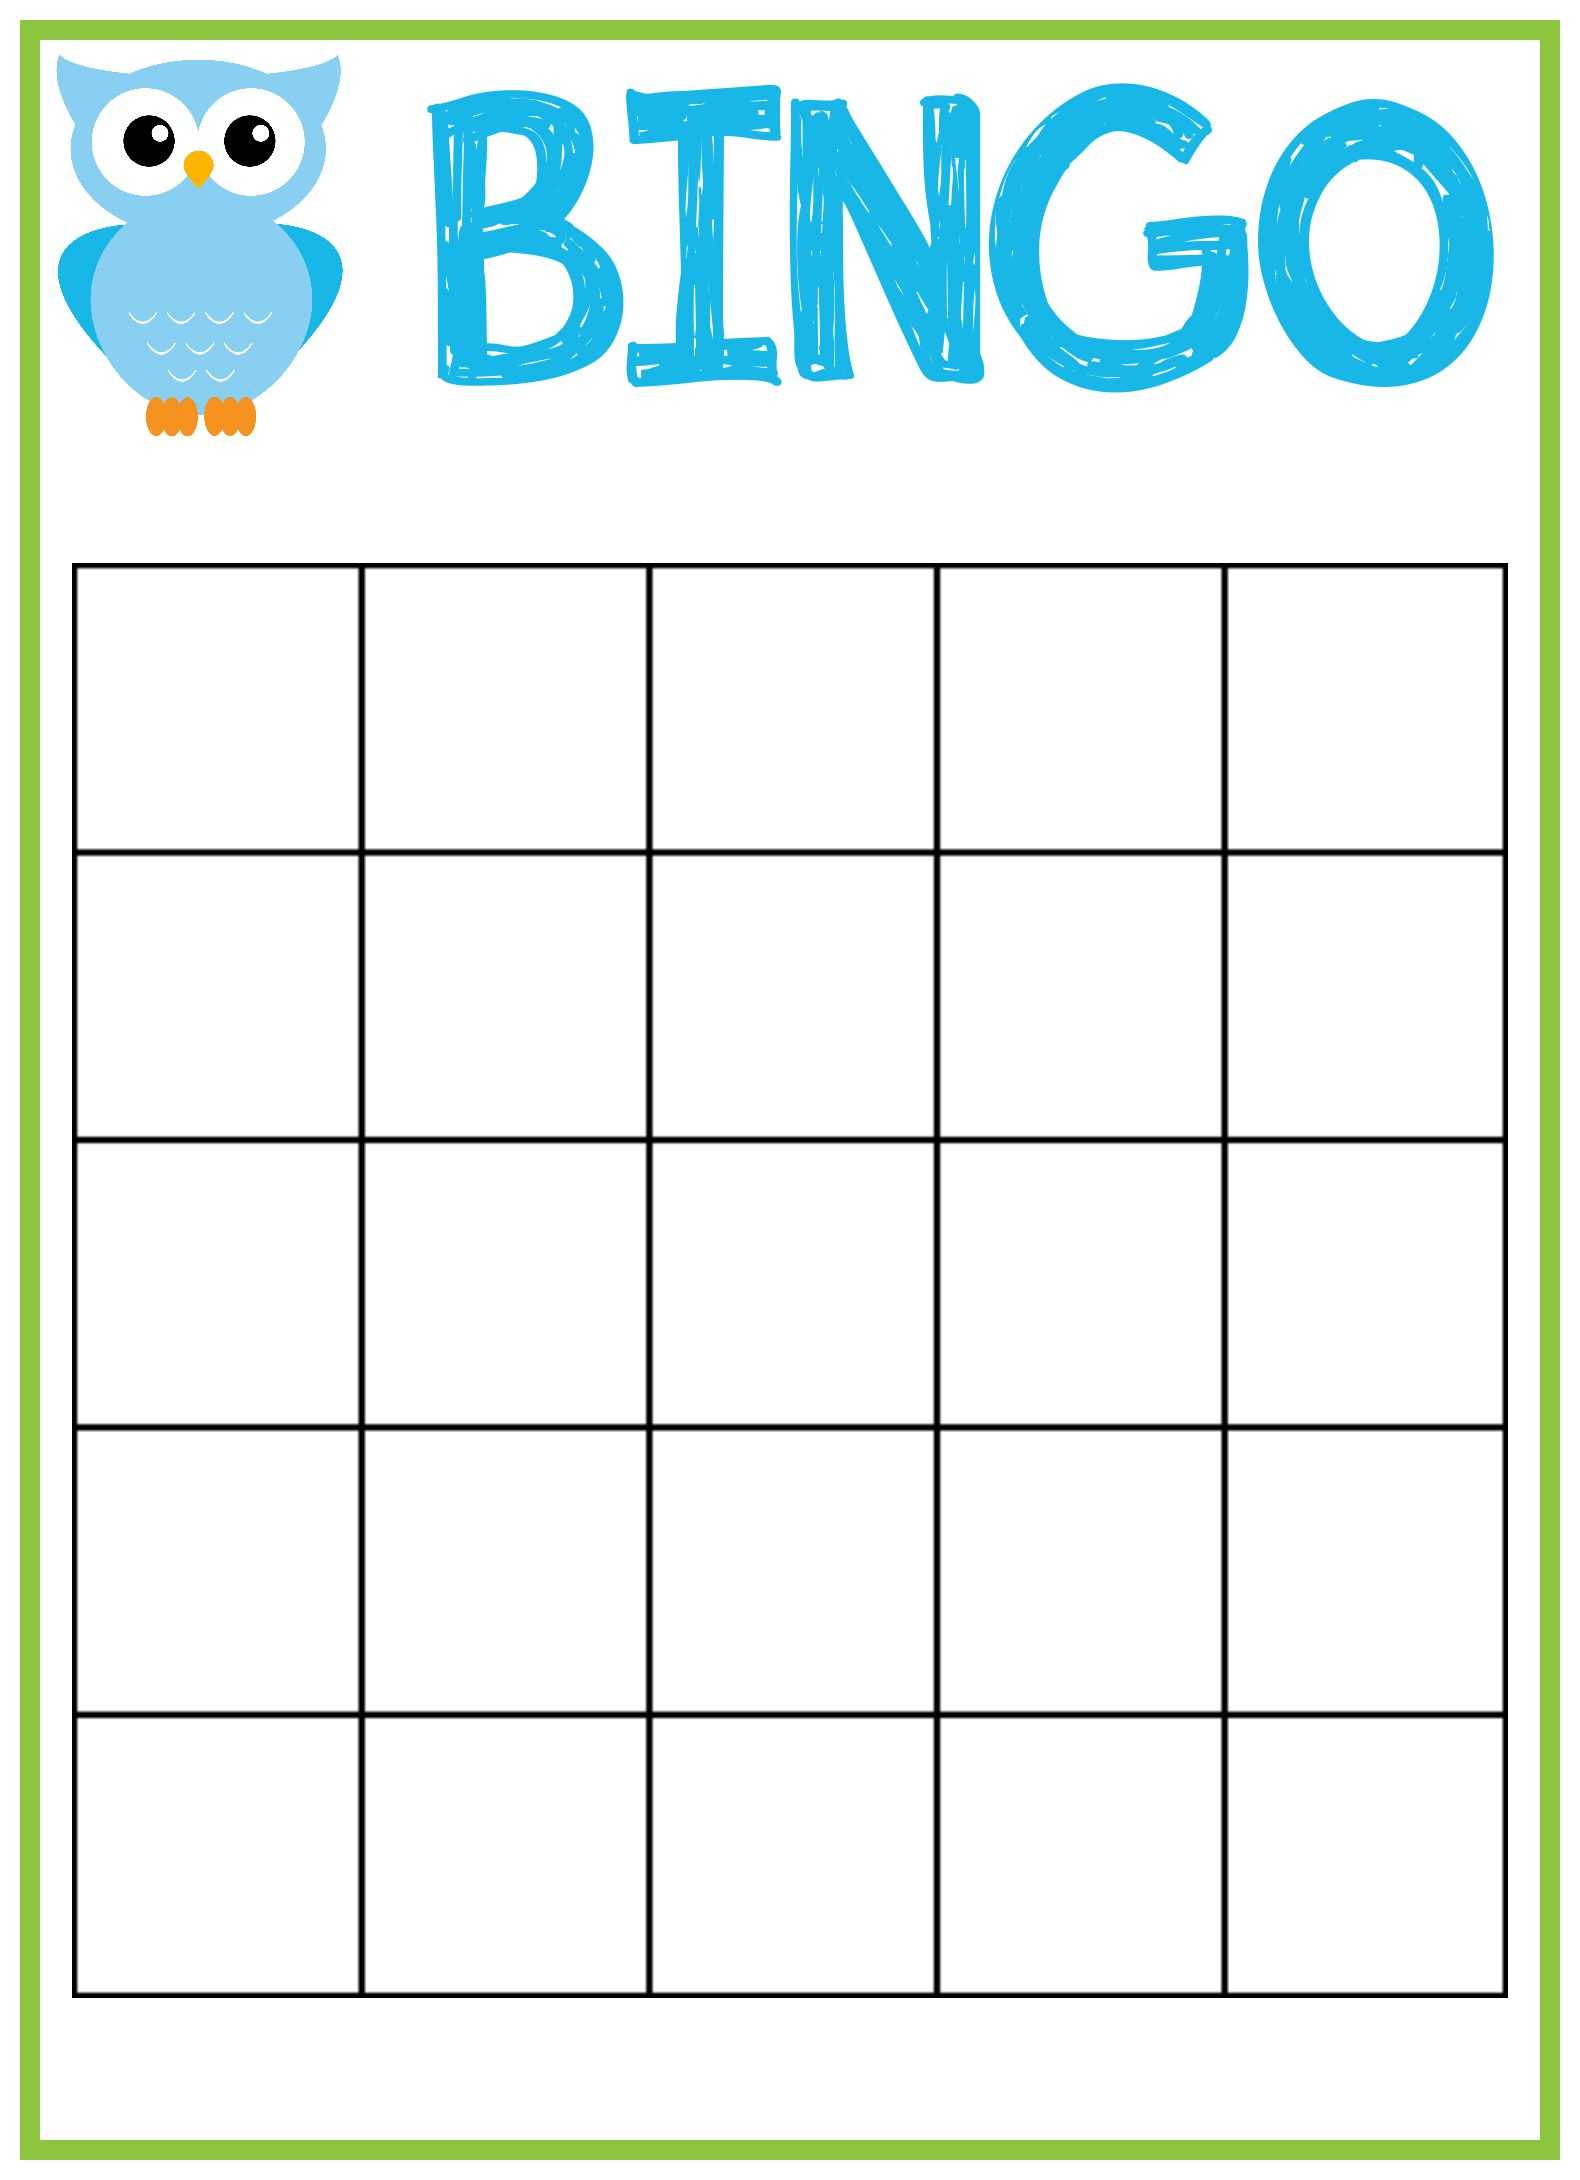 Bingo Card Template Word - Tomope.zaribanks.co With Regard To Blank Bingo Card Template Microsoft Word